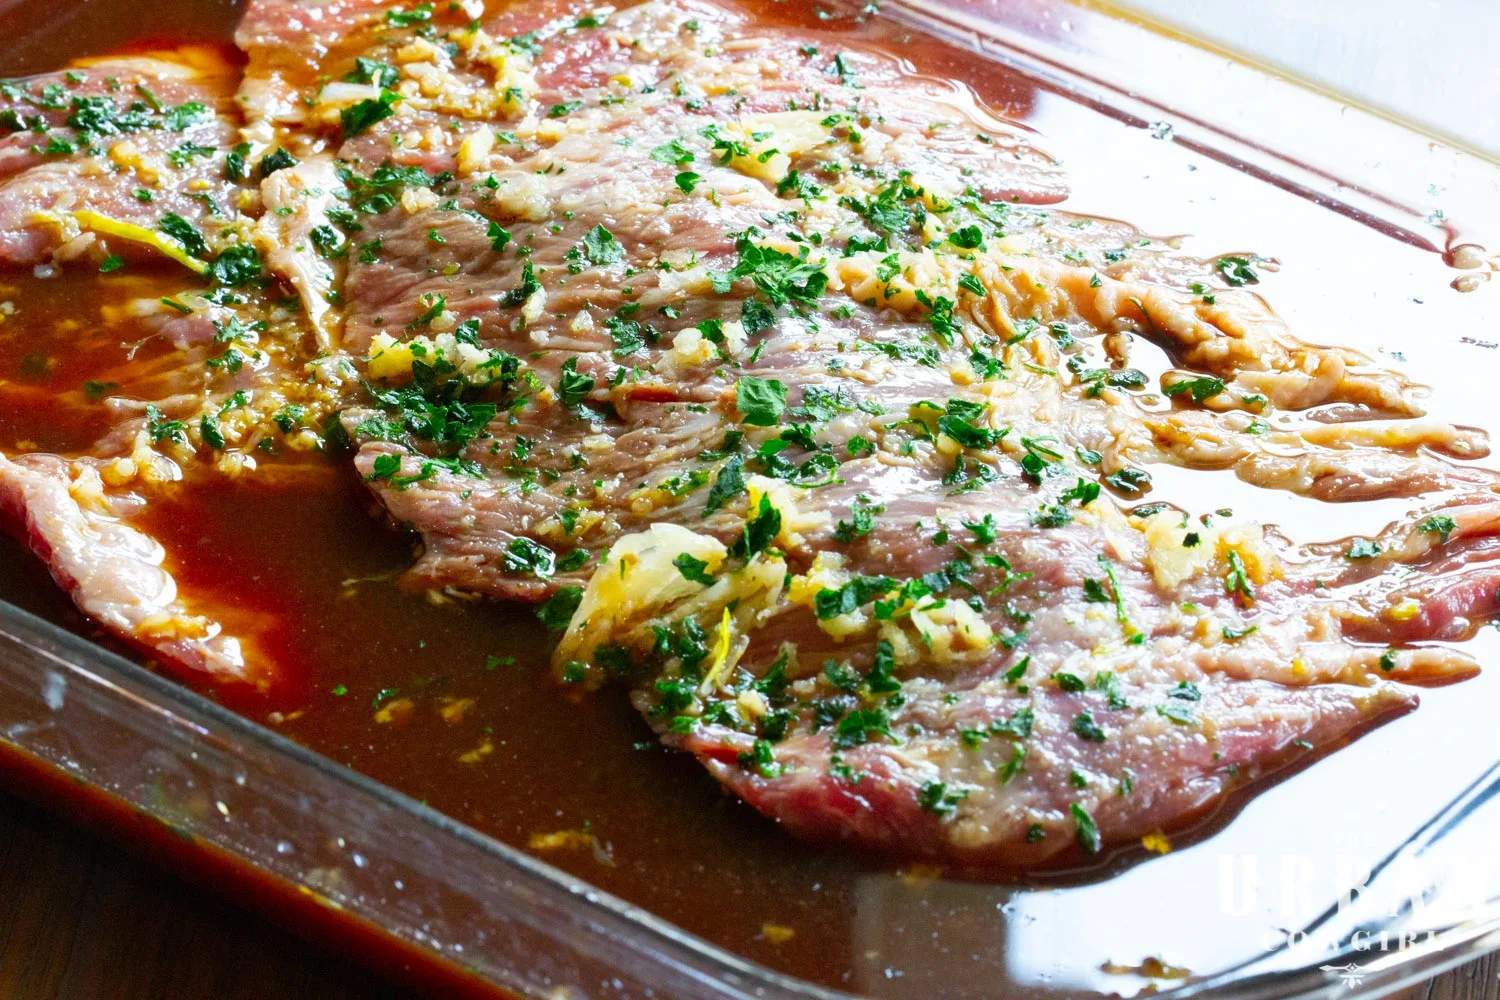 https://urbancowgirllife.com/wp-content/uploads/2019/05/steak-fajita-marinade-recipe-2.jpg.webp